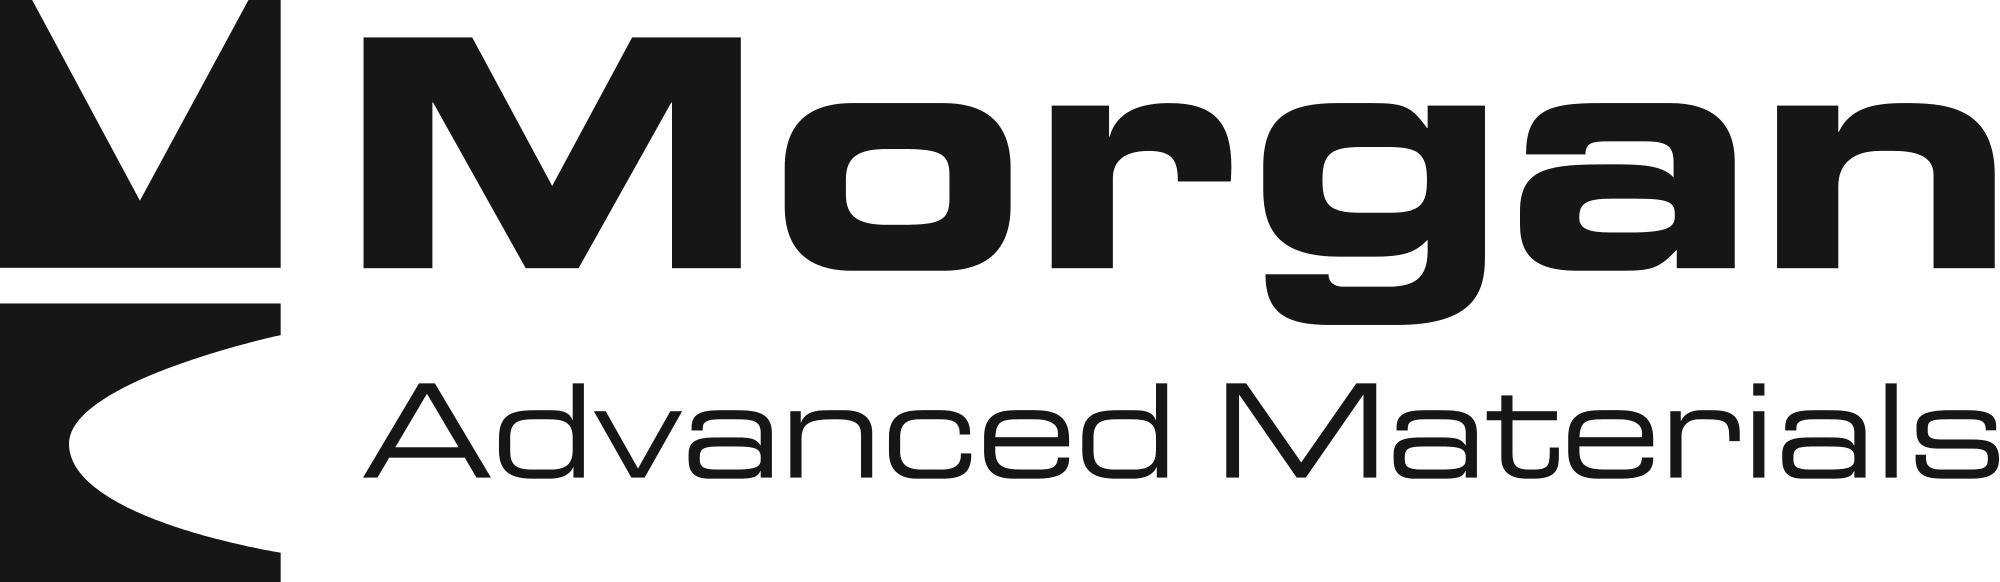 Morgan Advanced Materials - Specialty Graphite